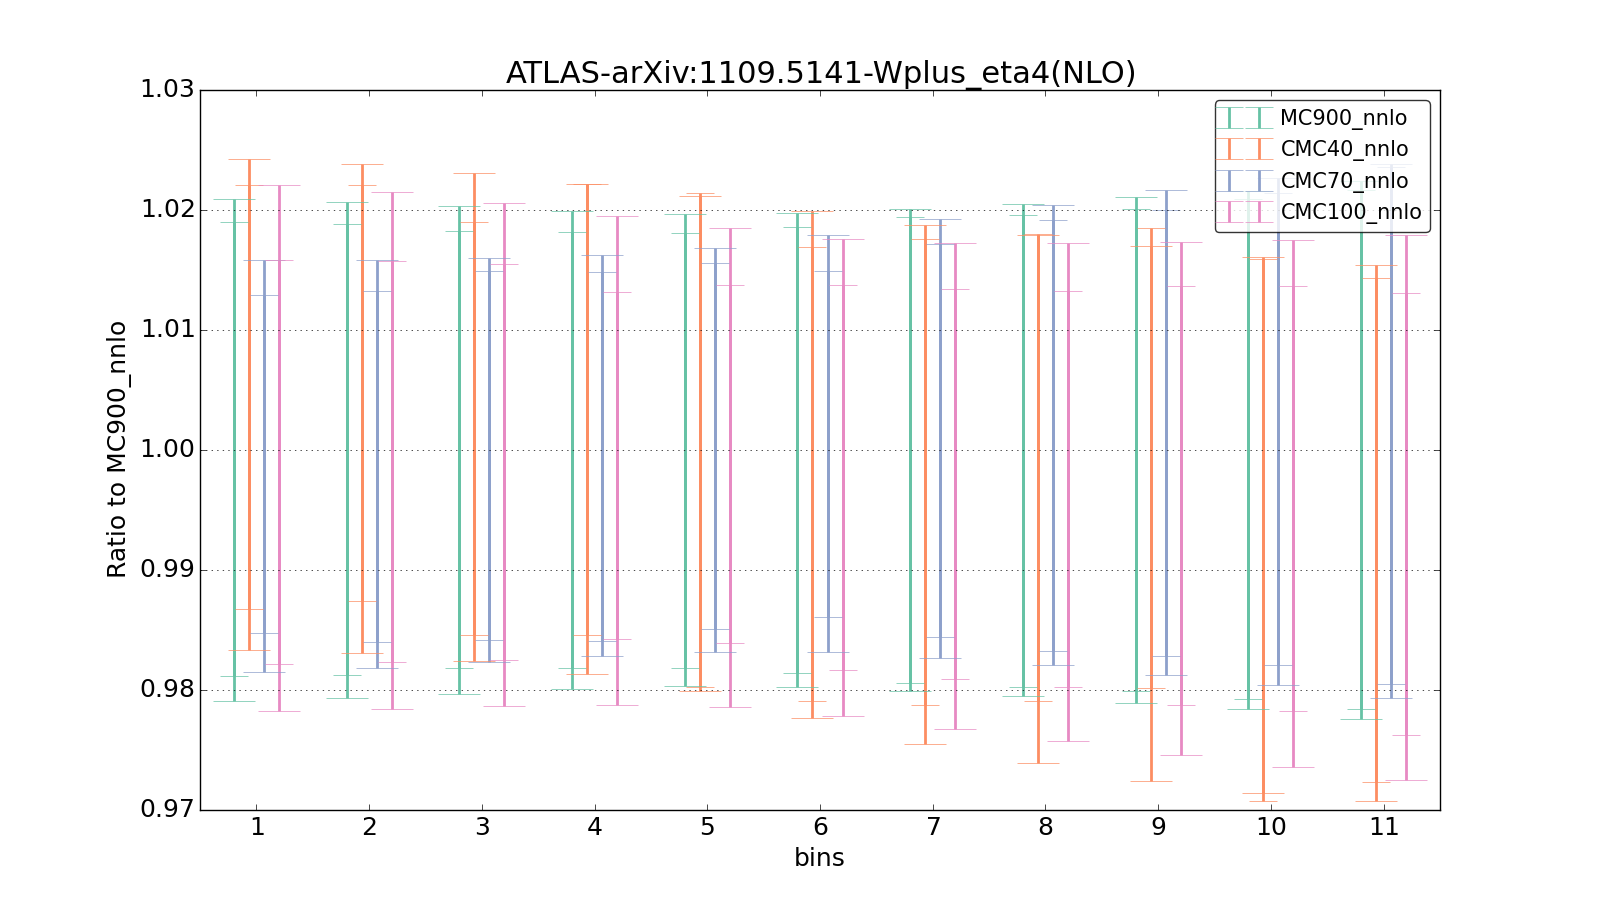 figure plots/CMCpheno/group_0_ciplot_ATLAS-arXiv:11095141-Wplus_eta4(NLO).png